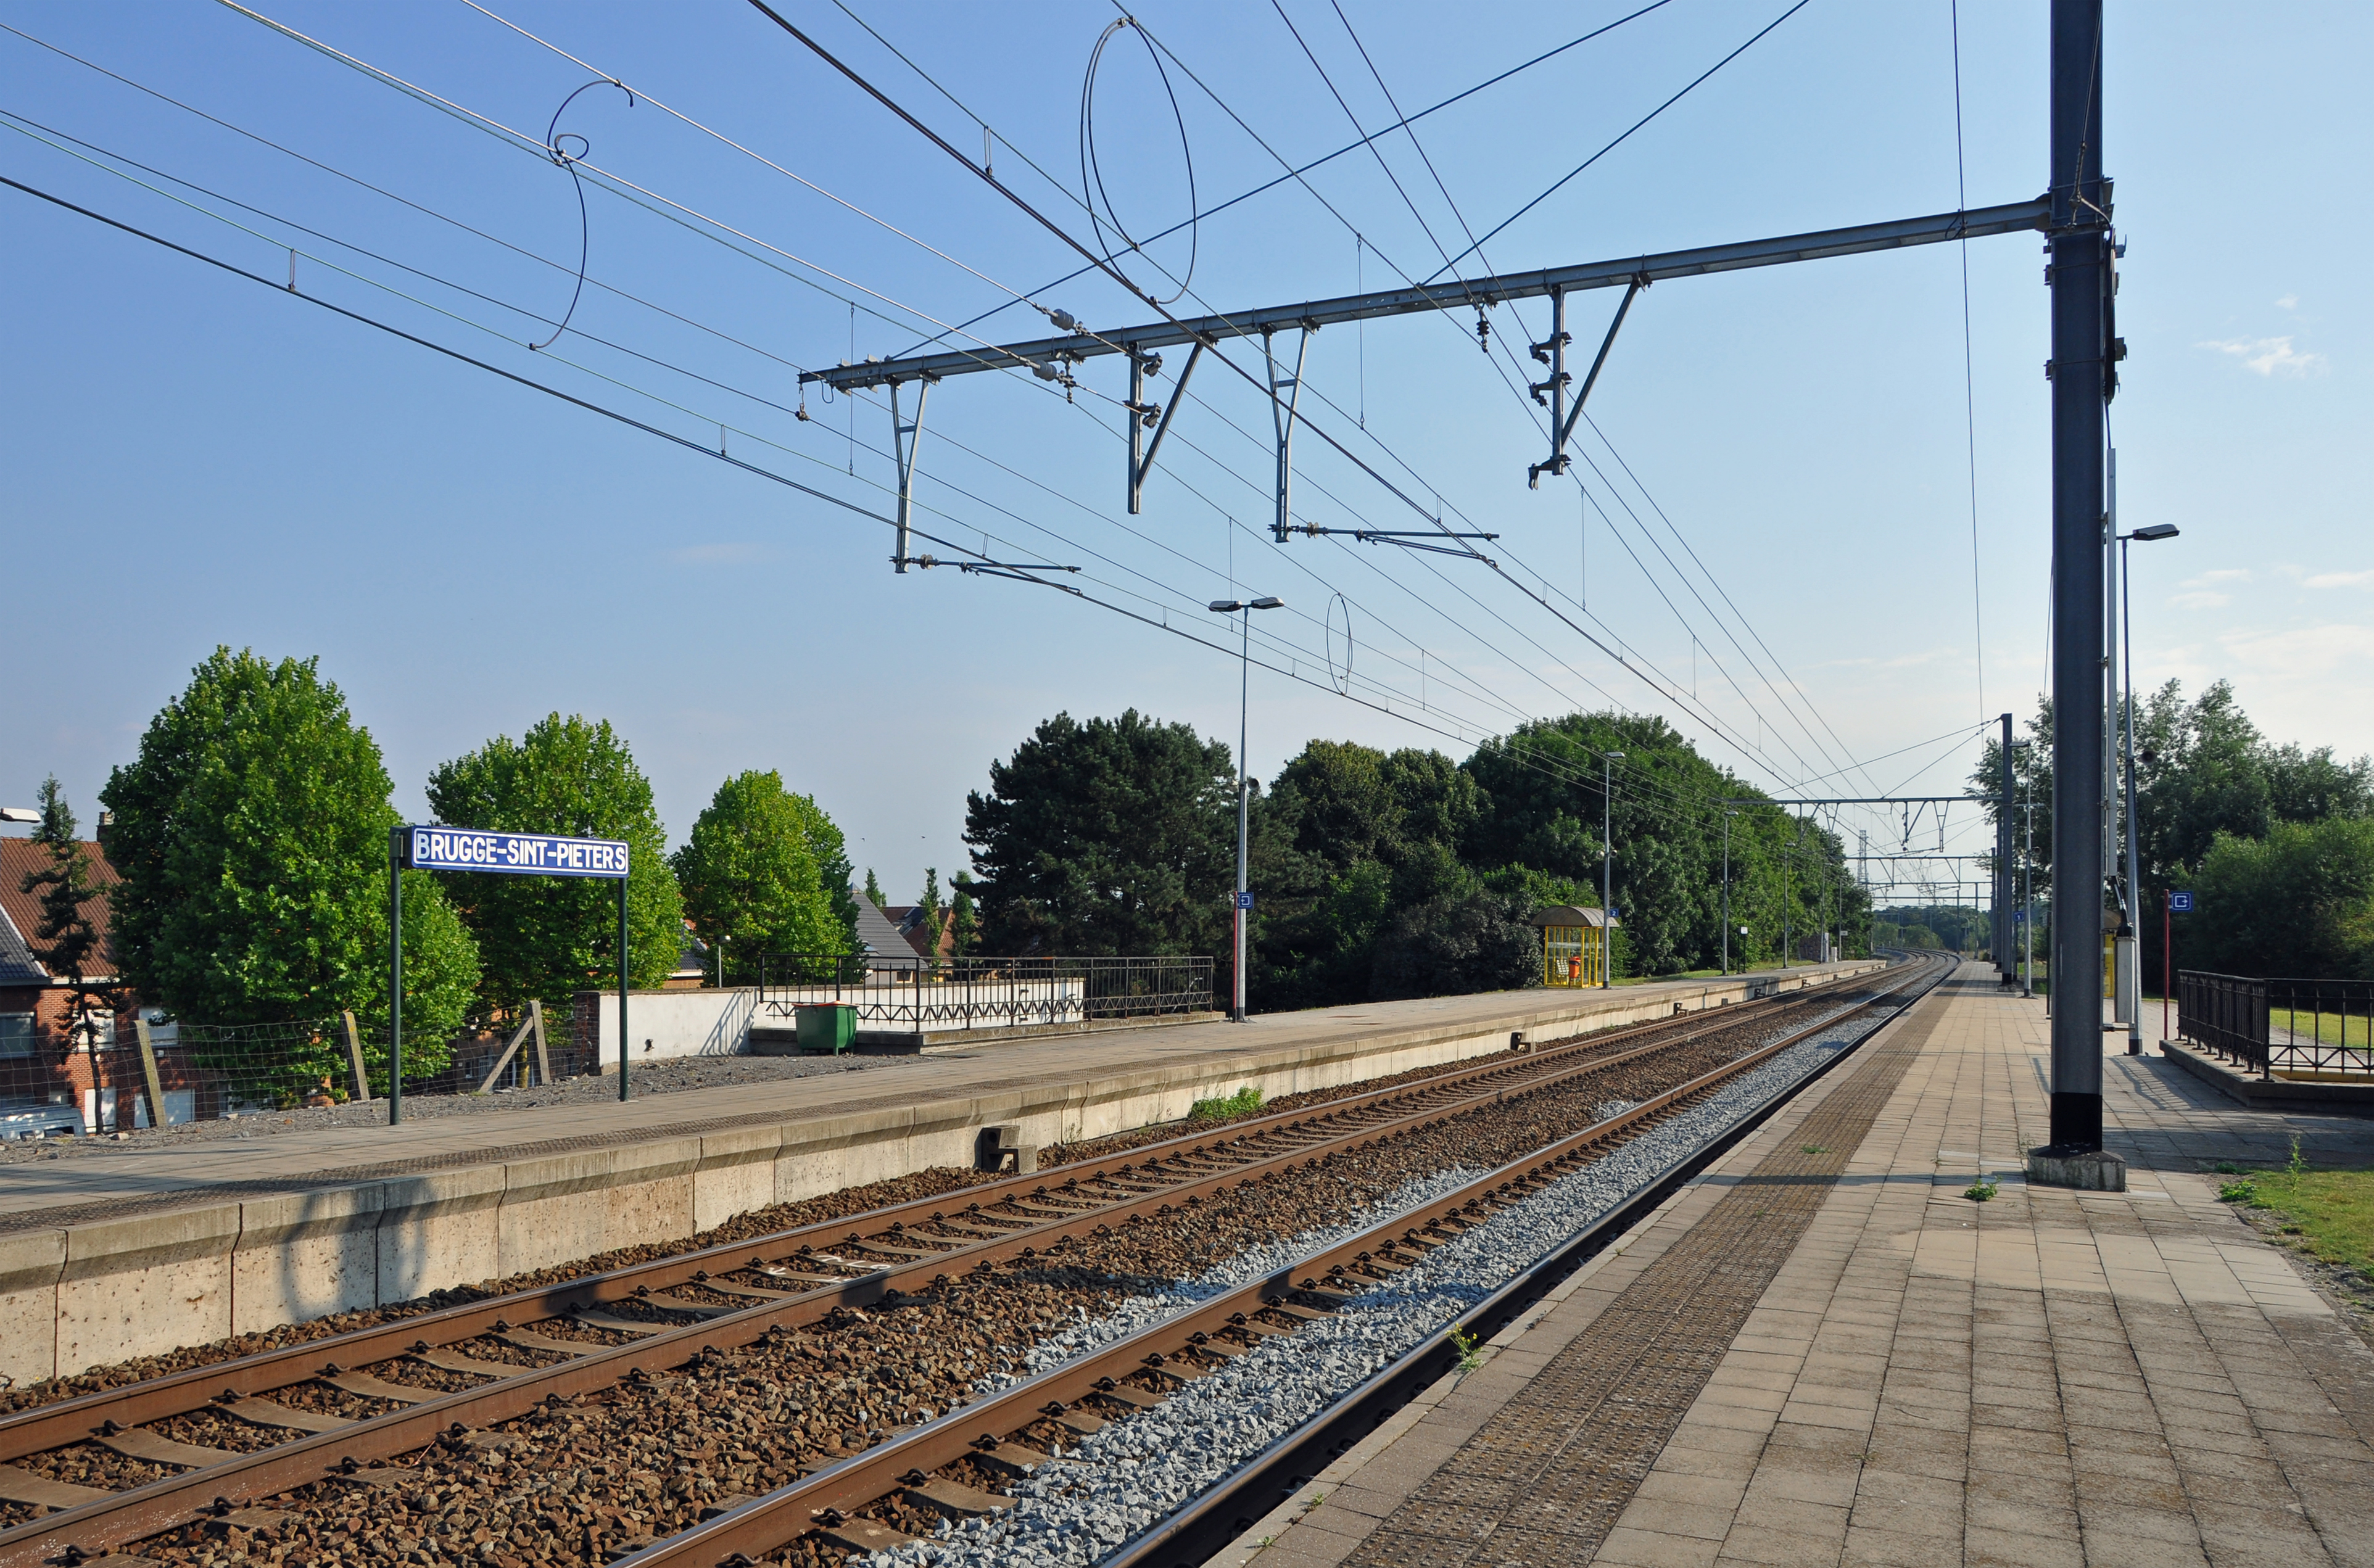 Station Brugge-Sint-Pieters R02